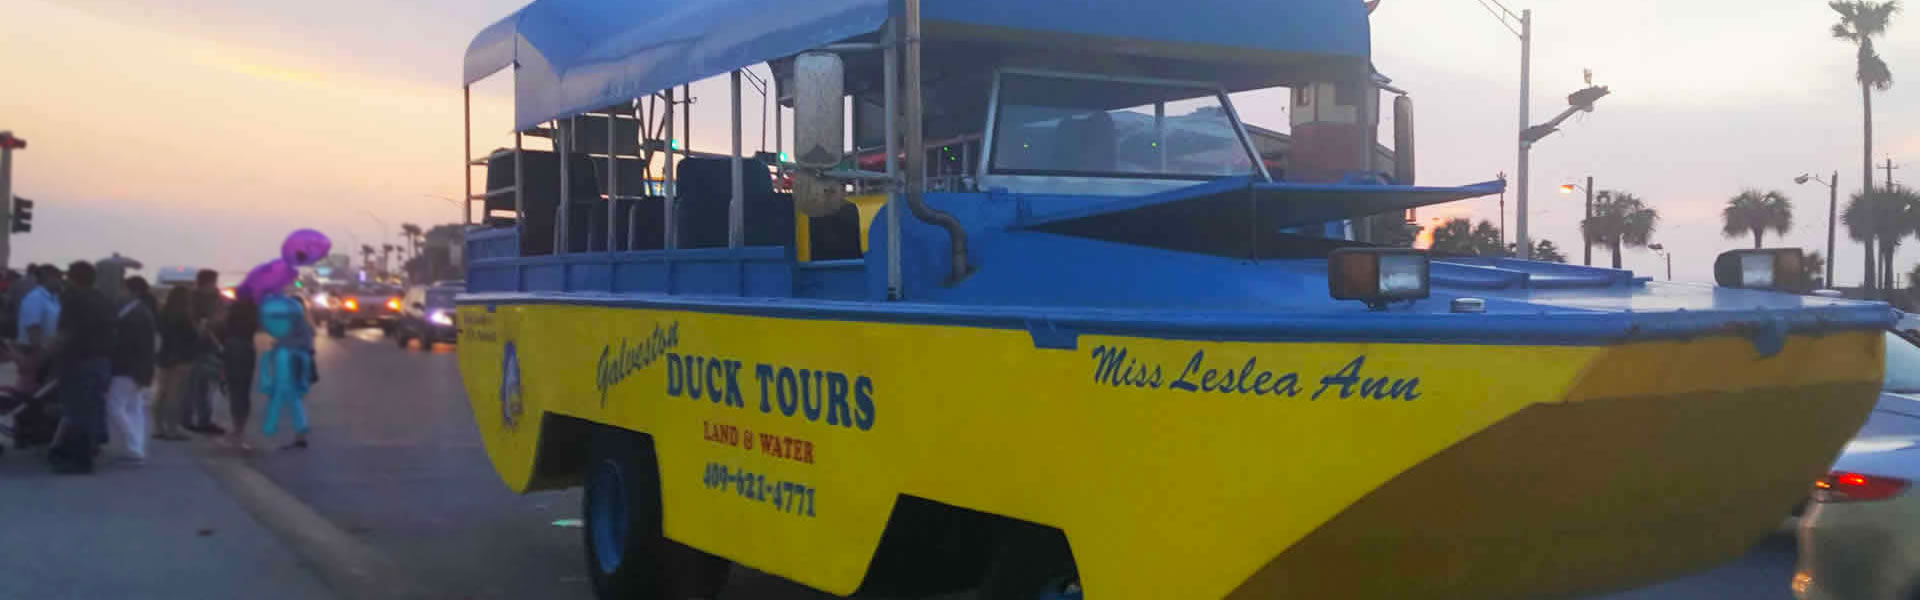 Galveston Island Duck Tours